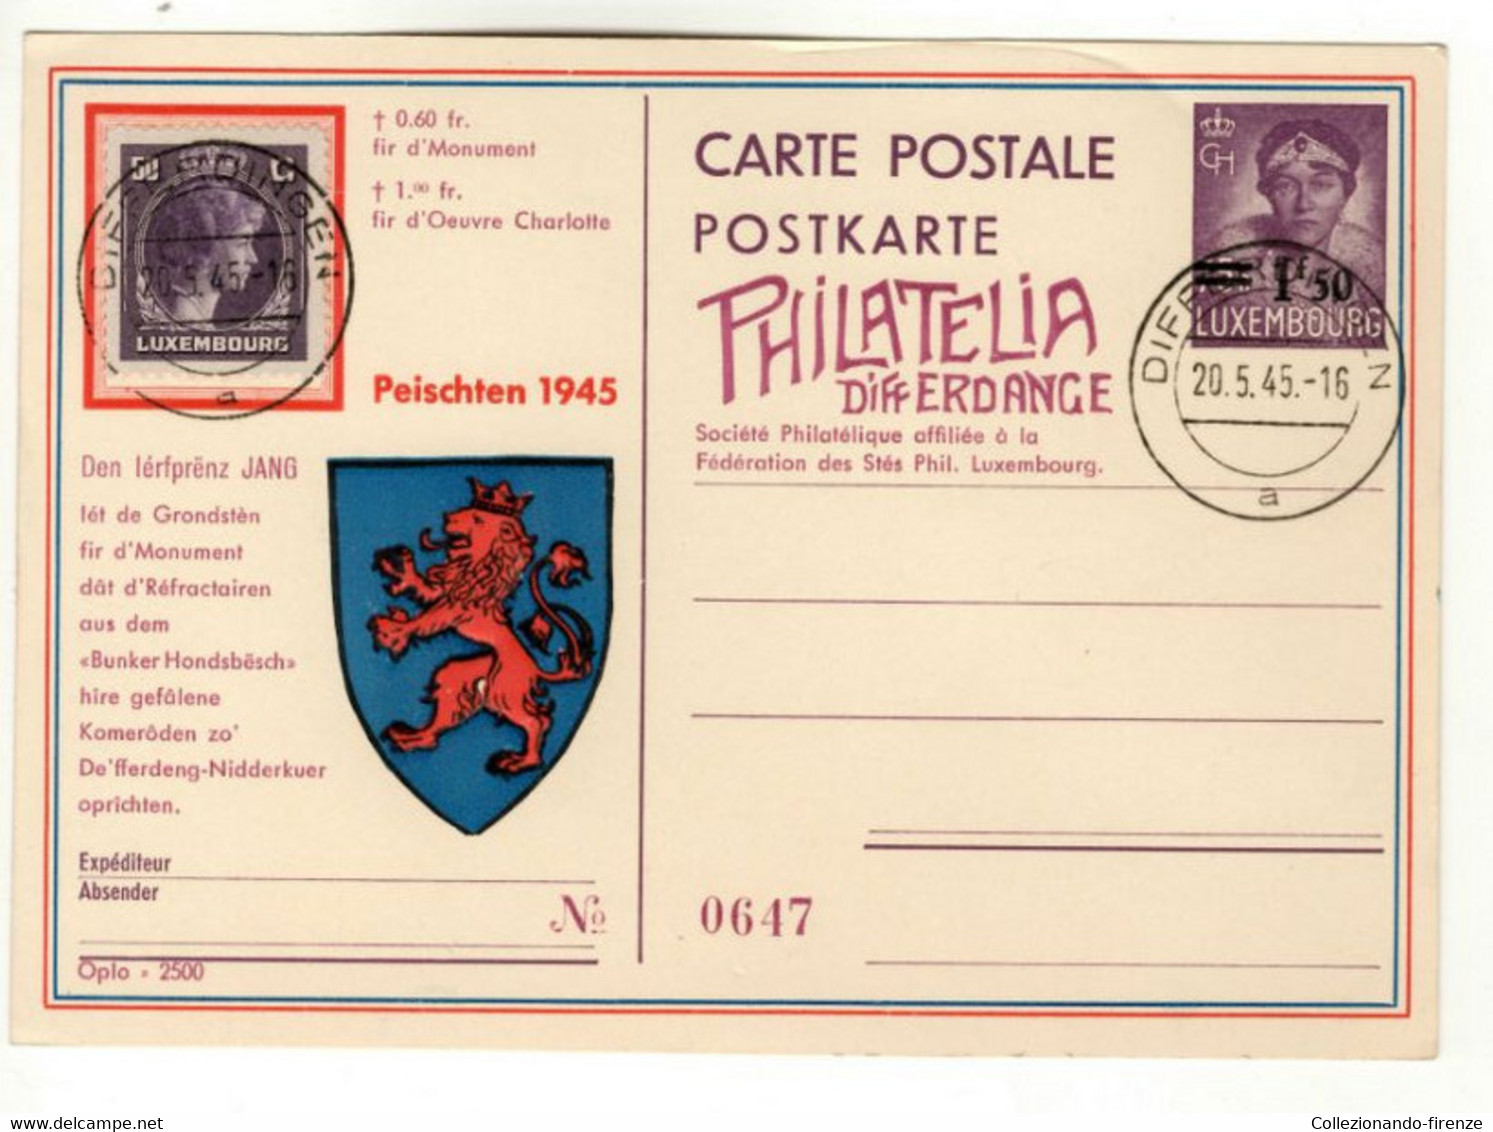 Cartolina Postkarte Philatelia Differdange - Differdange